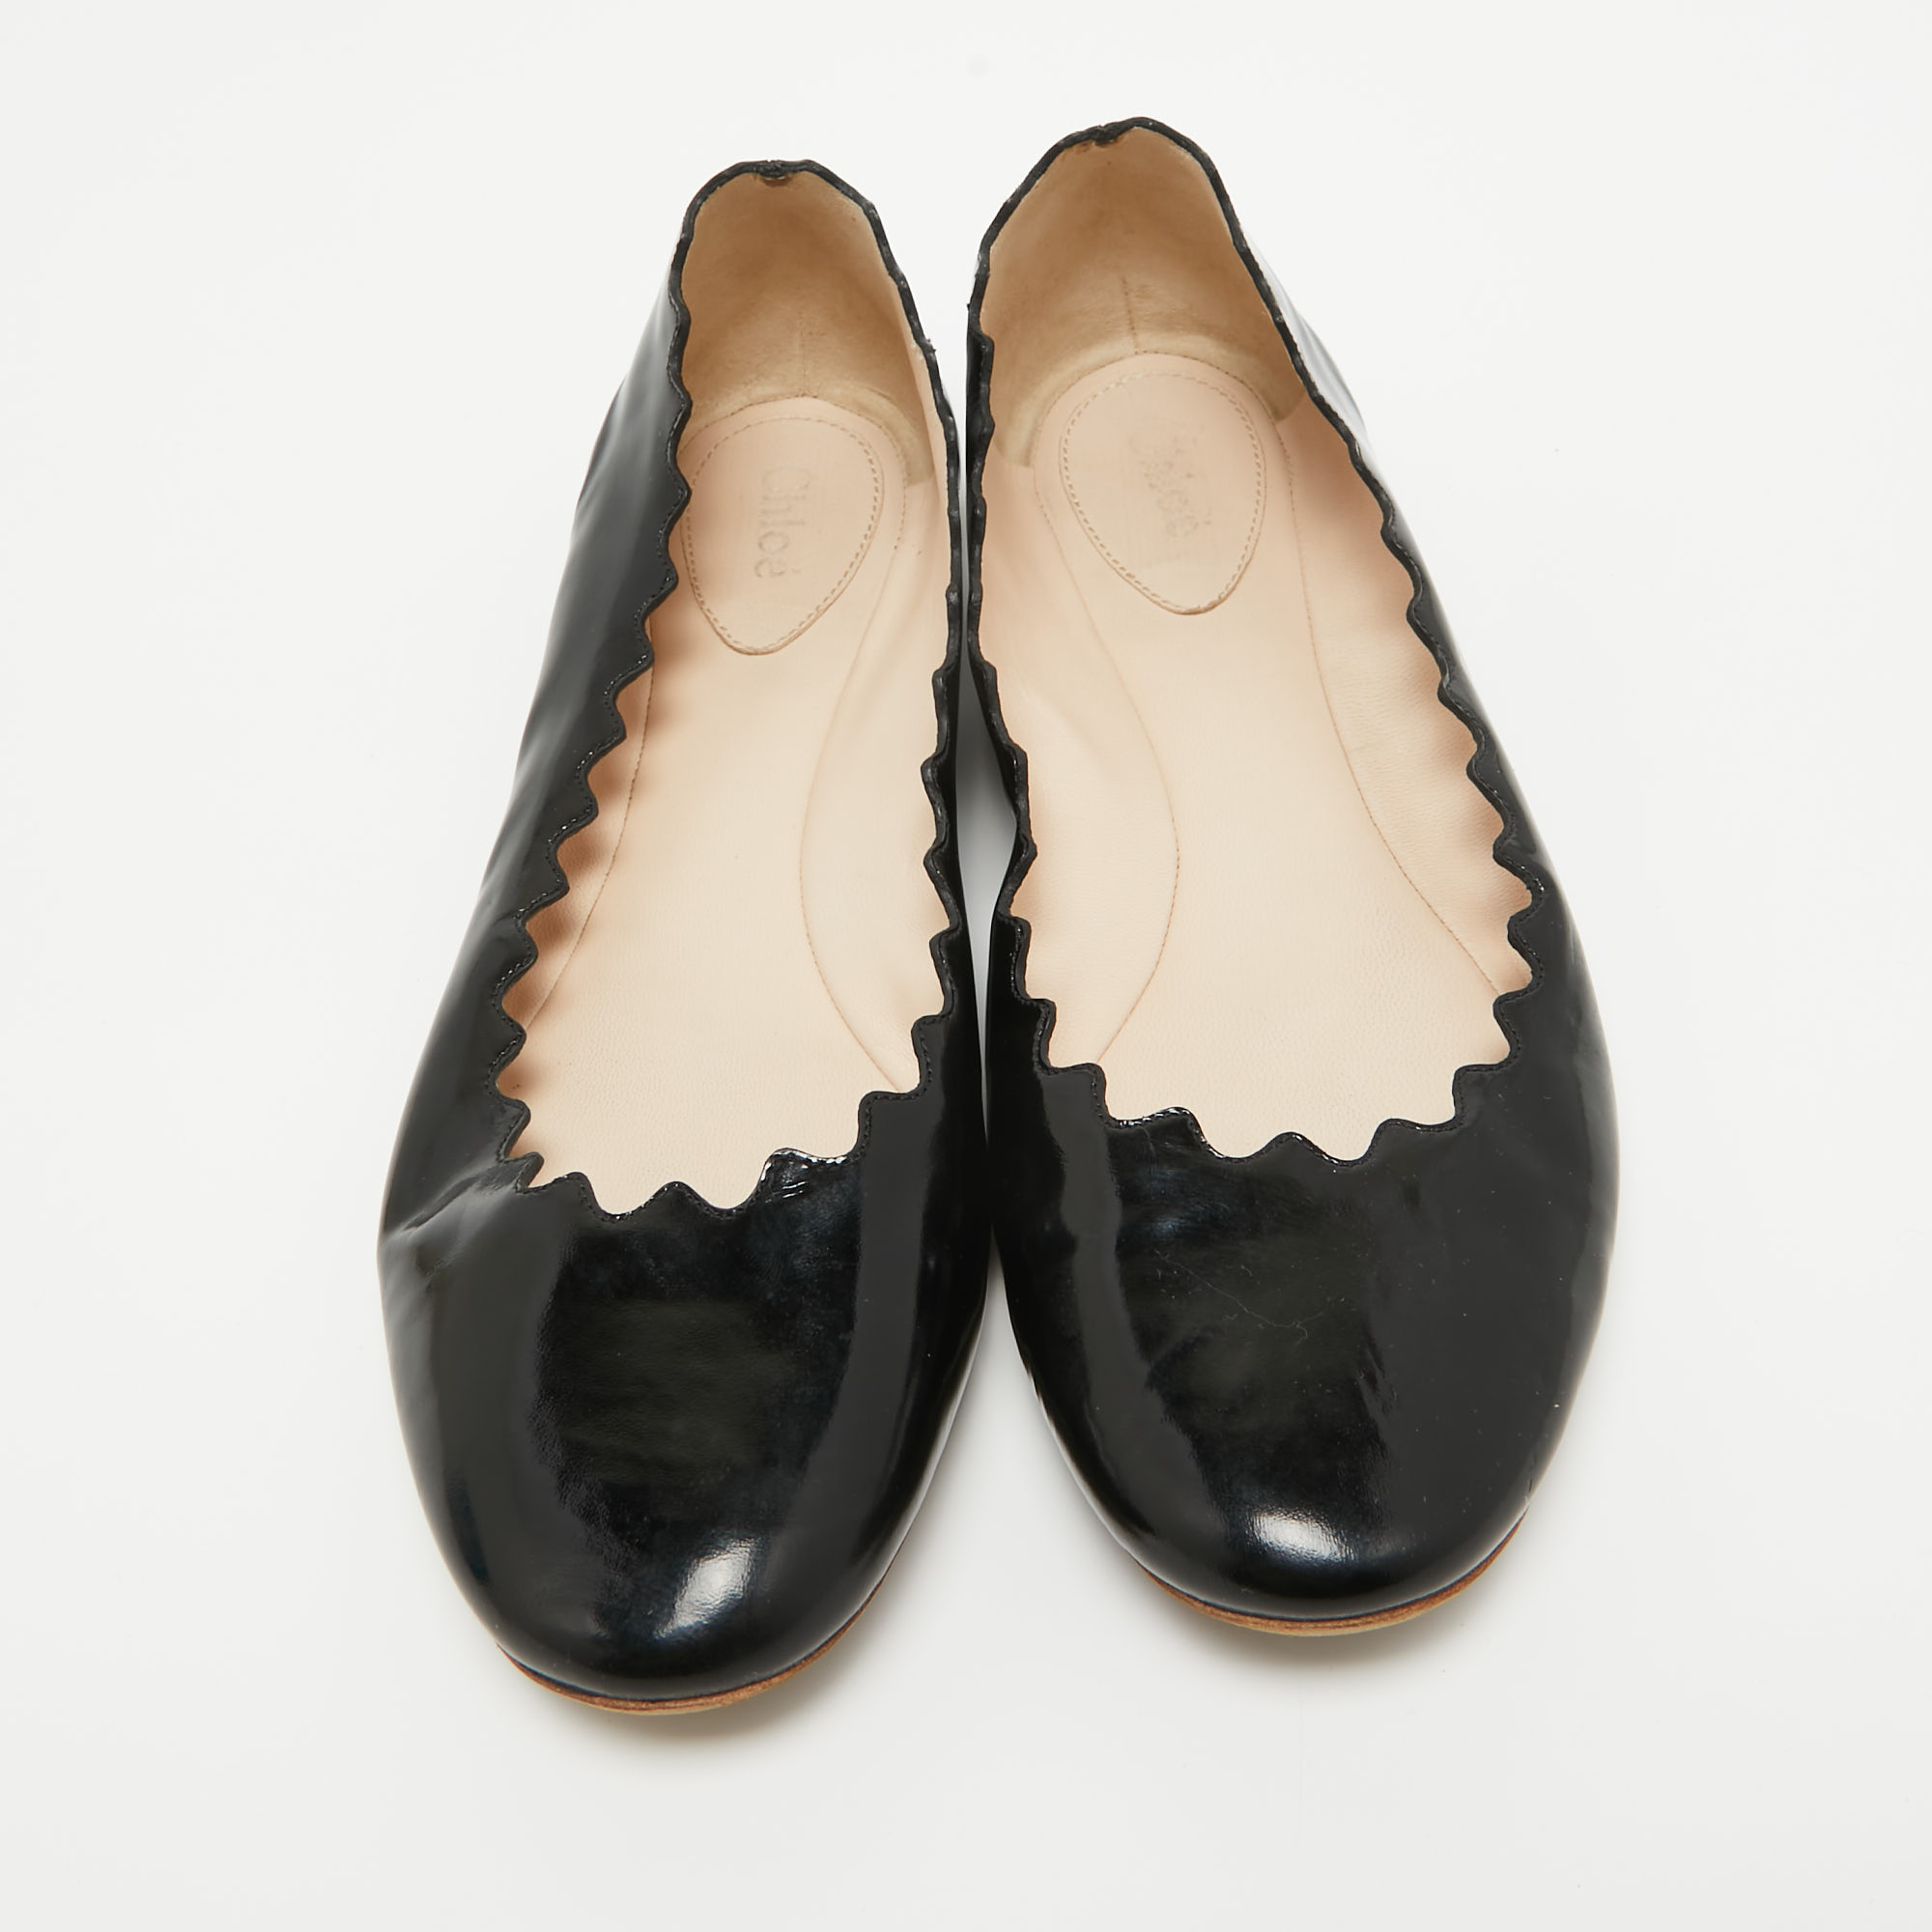 Chloe Black Patent Leather Laurena Scalloped Ballet Flats Size 39.5